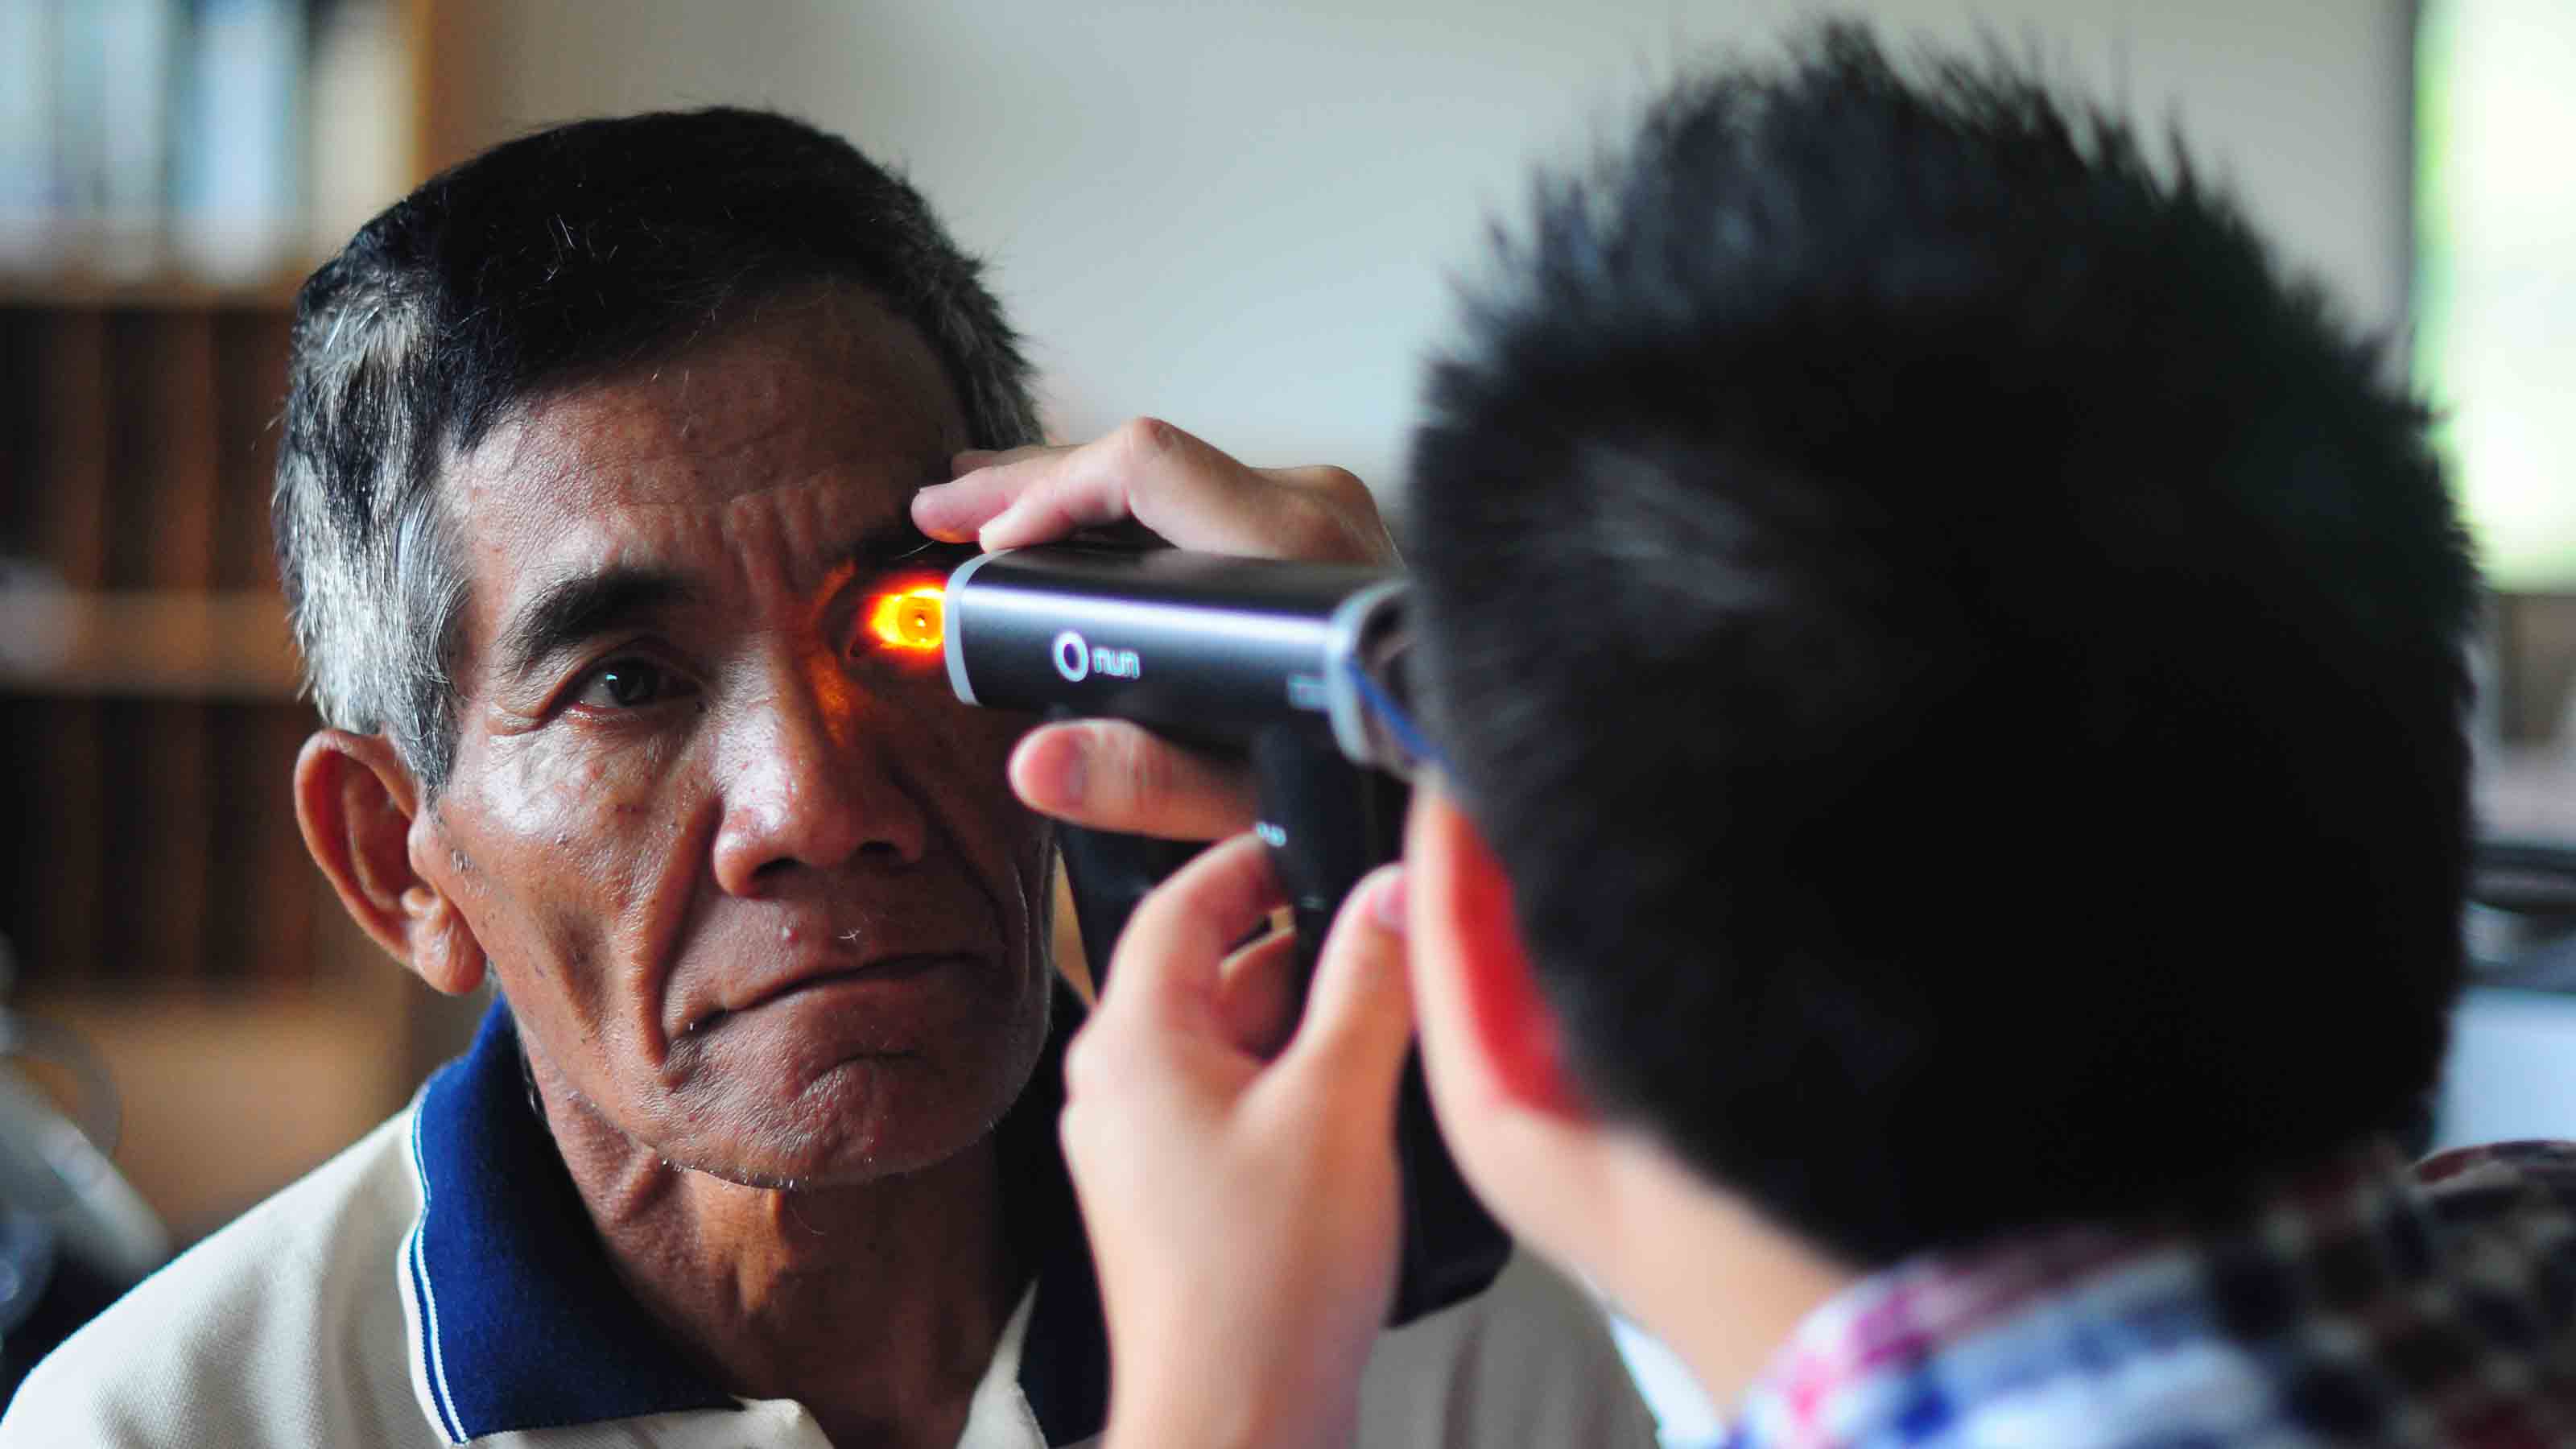 Man getting his eye checked